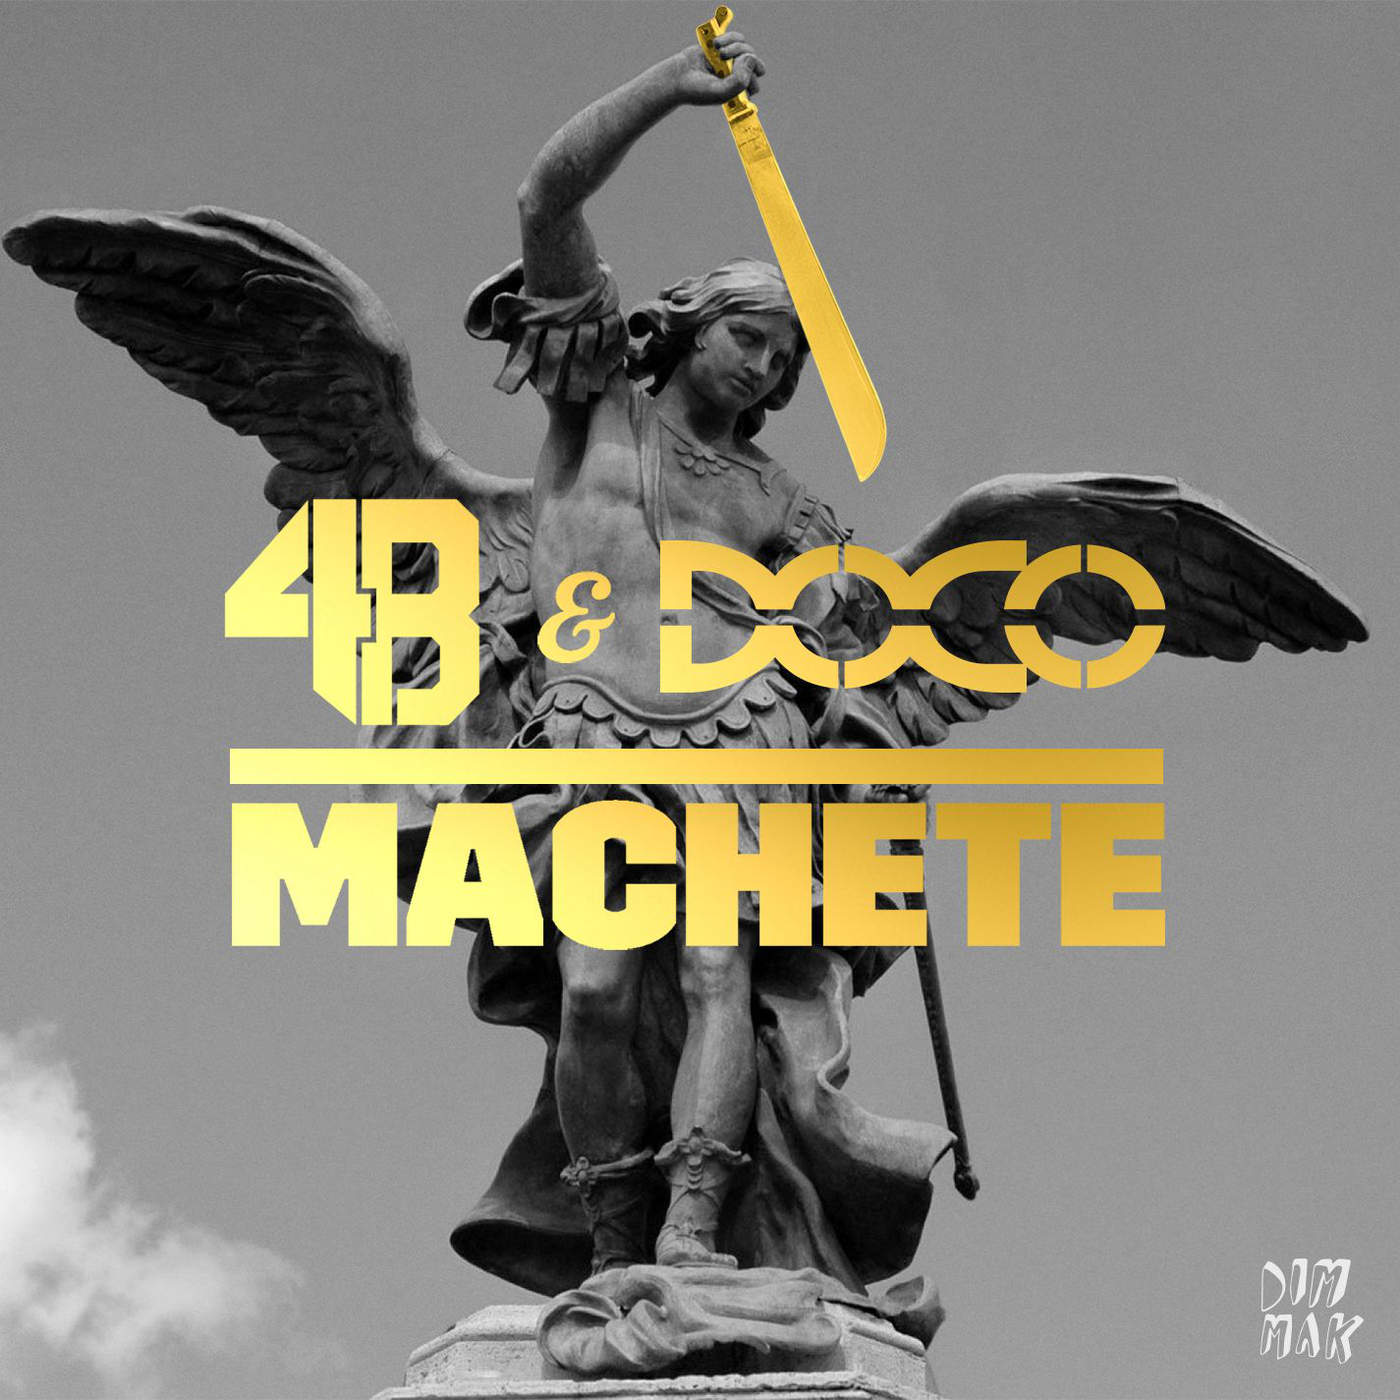 4B & DOCO Machete Album Cover Art